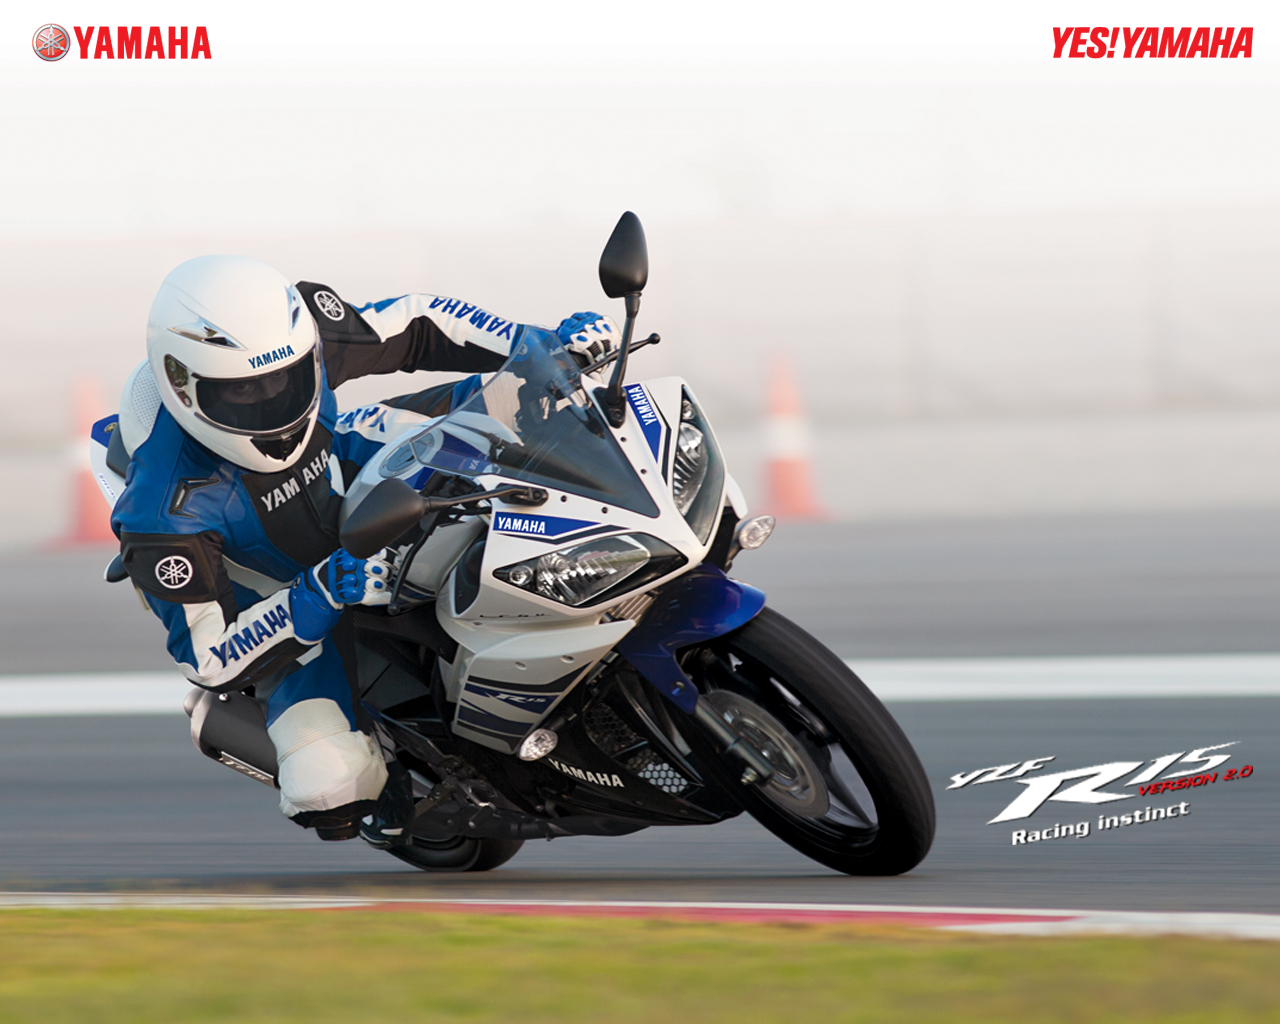 Yamaha YZF R15 Version 2.0: 2013 Yamaha R15 - New Colors